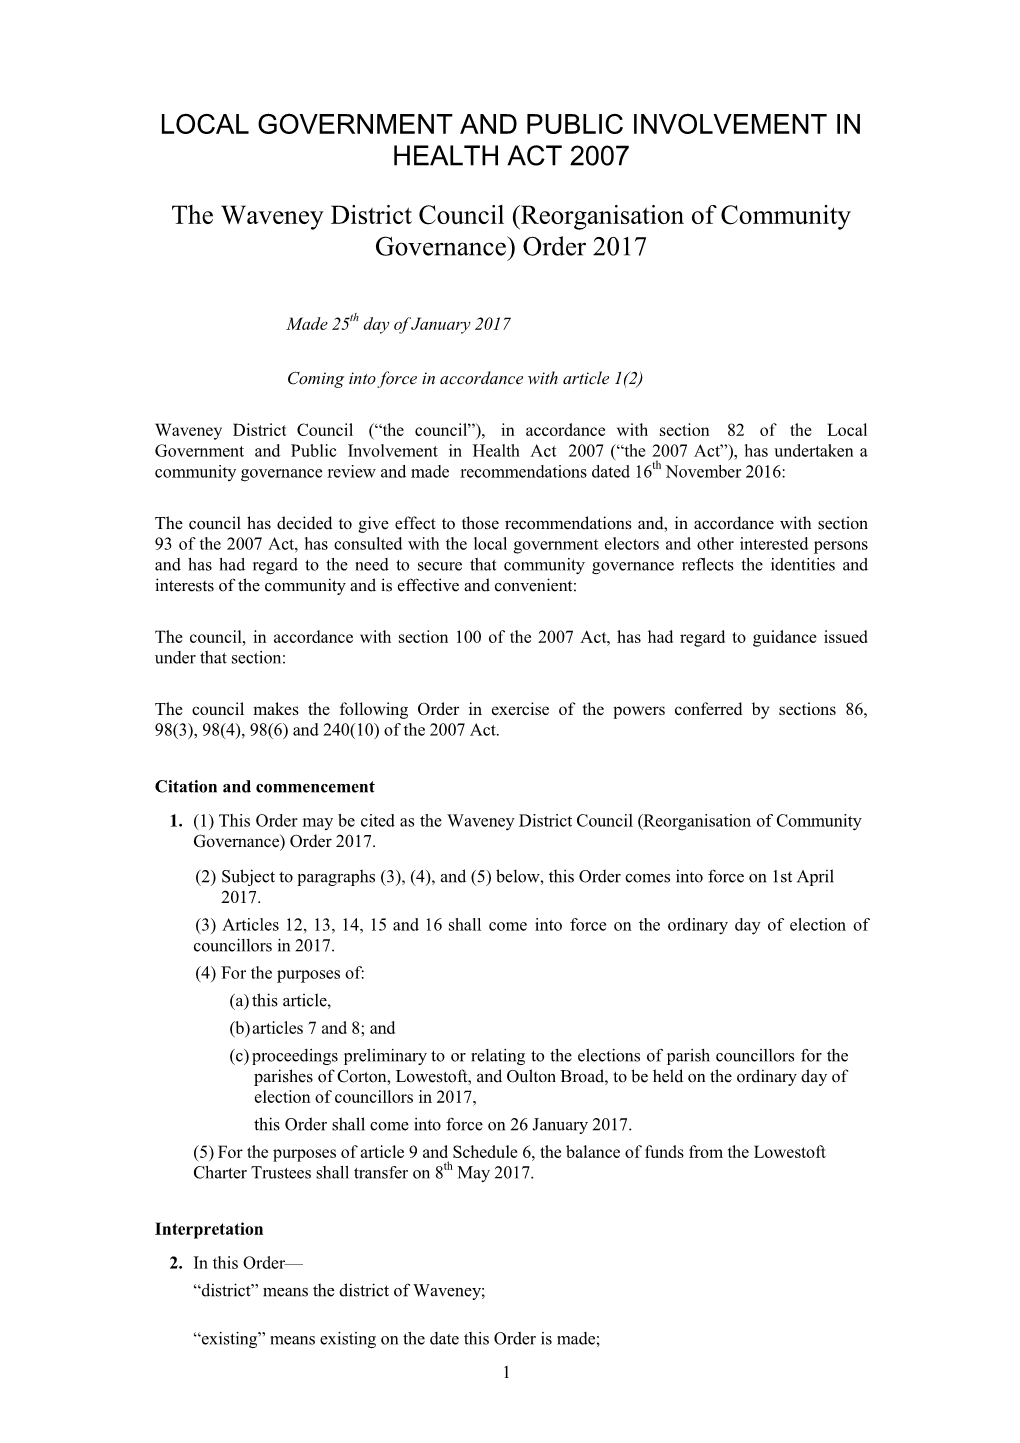 Reorganisation of Community Governance) Order 2017